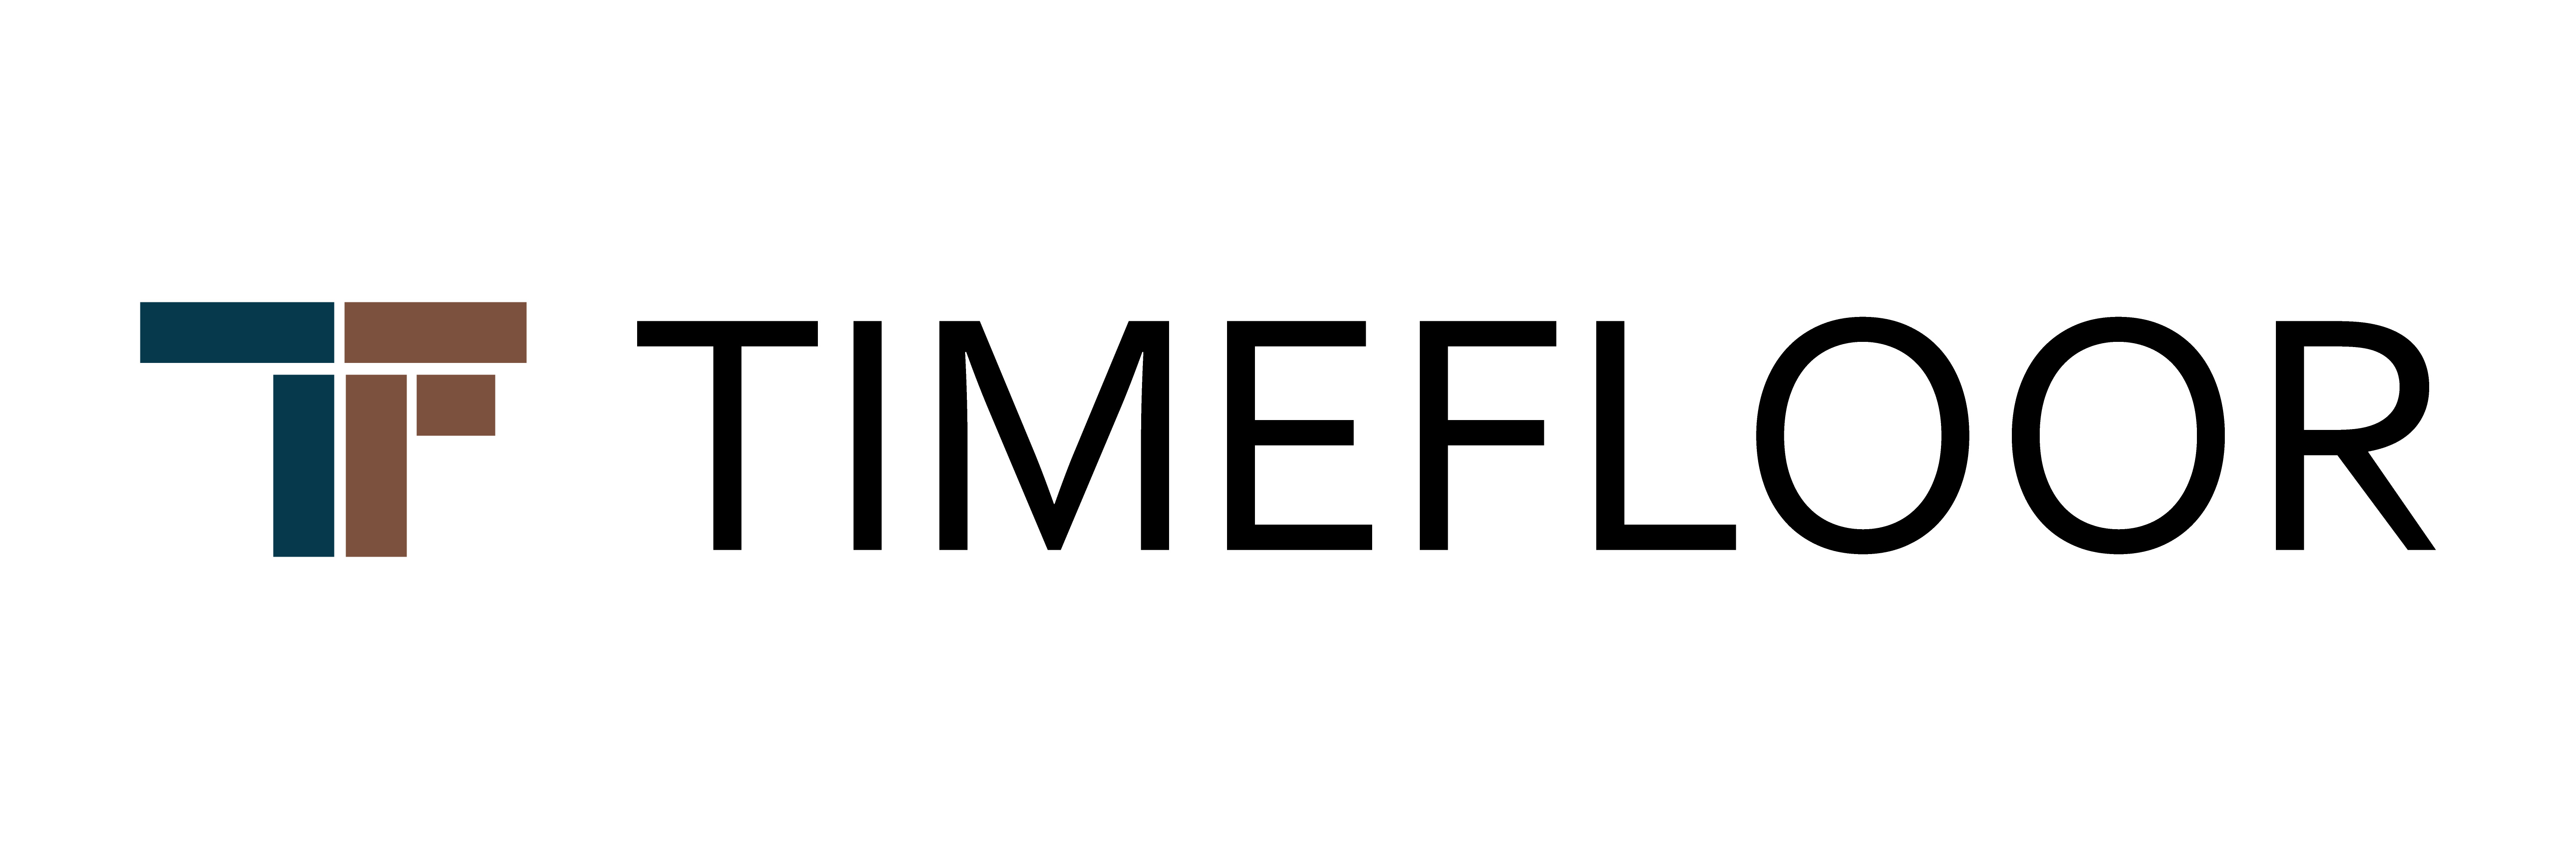 Timefloor